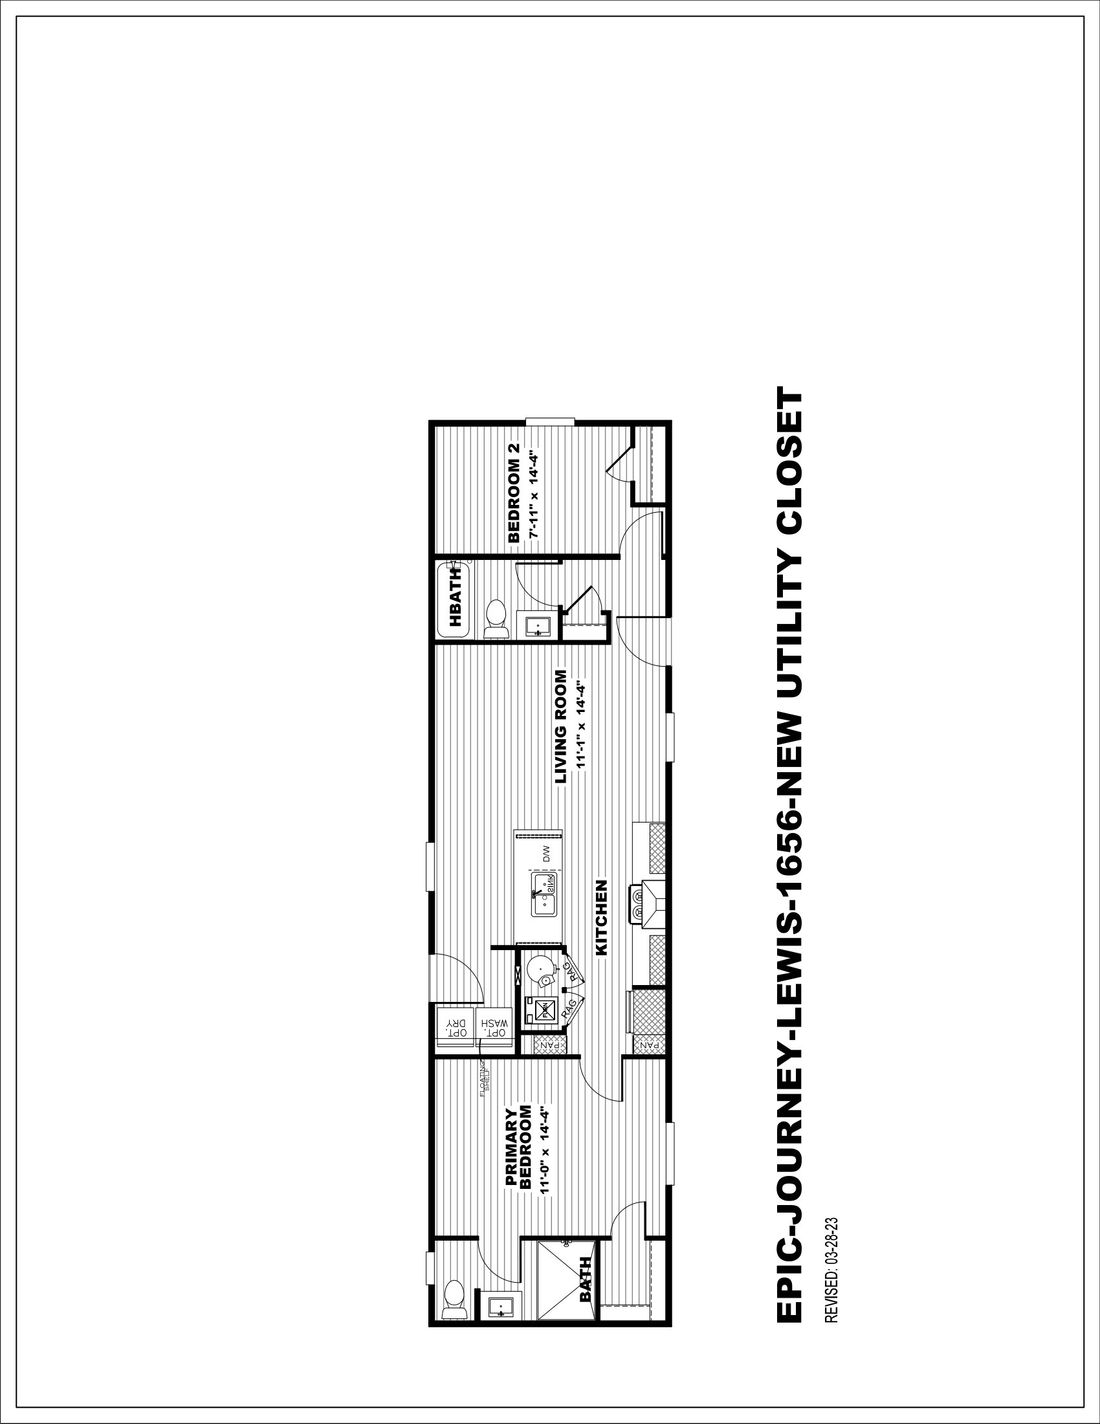 The LEWIS 6016-1056 Floor Plan